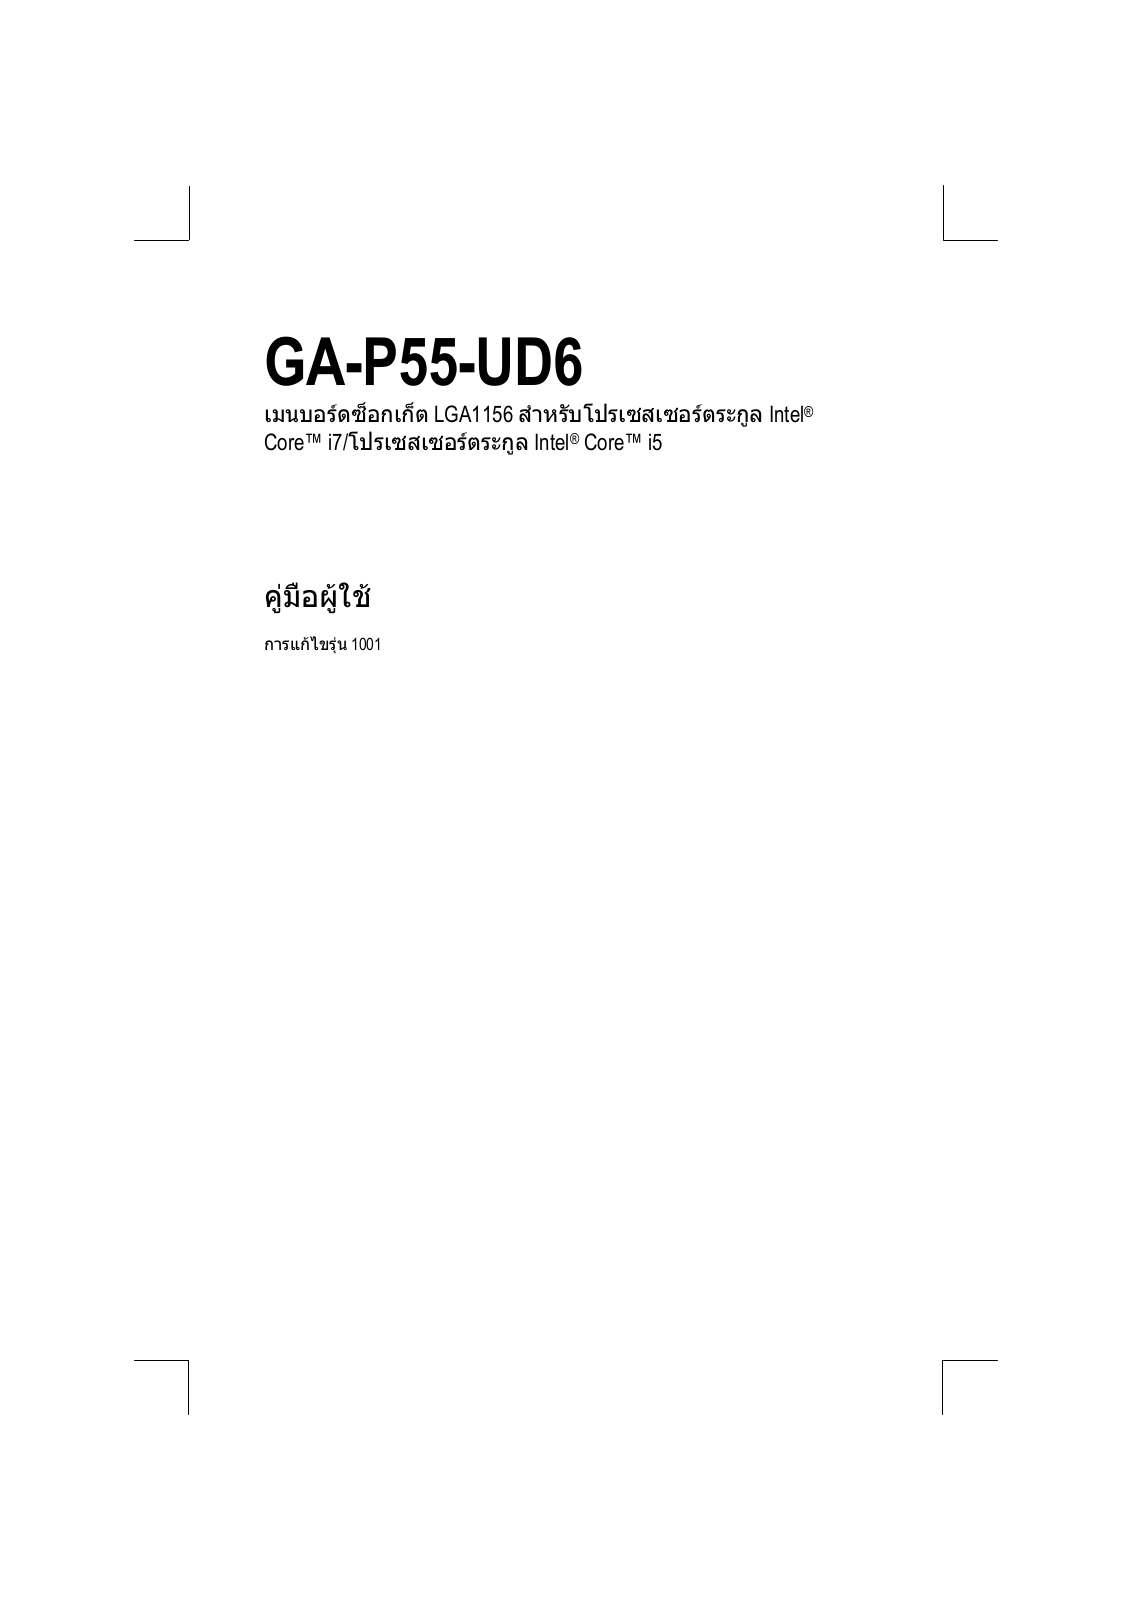 Gigabyte GA-P55-UD6-C, GA-P55-UD6 User Manual